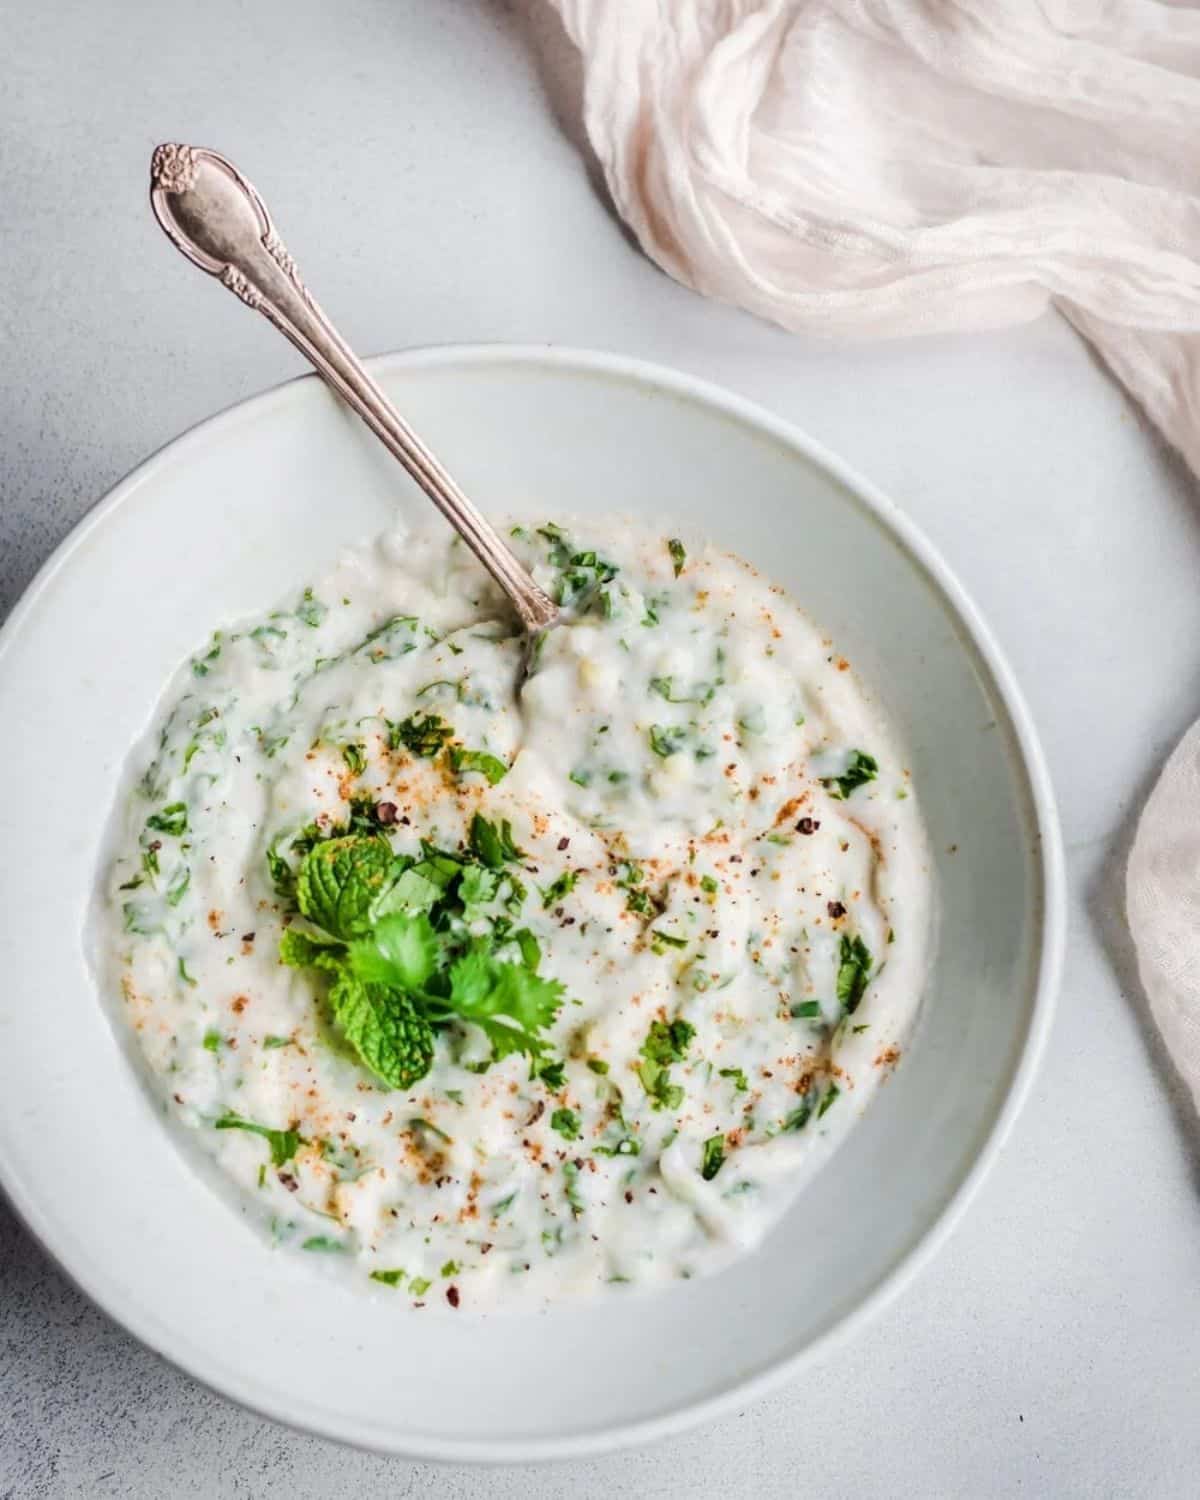 Creamy gluten-free Vegan Raita on a white plate with a spoon.